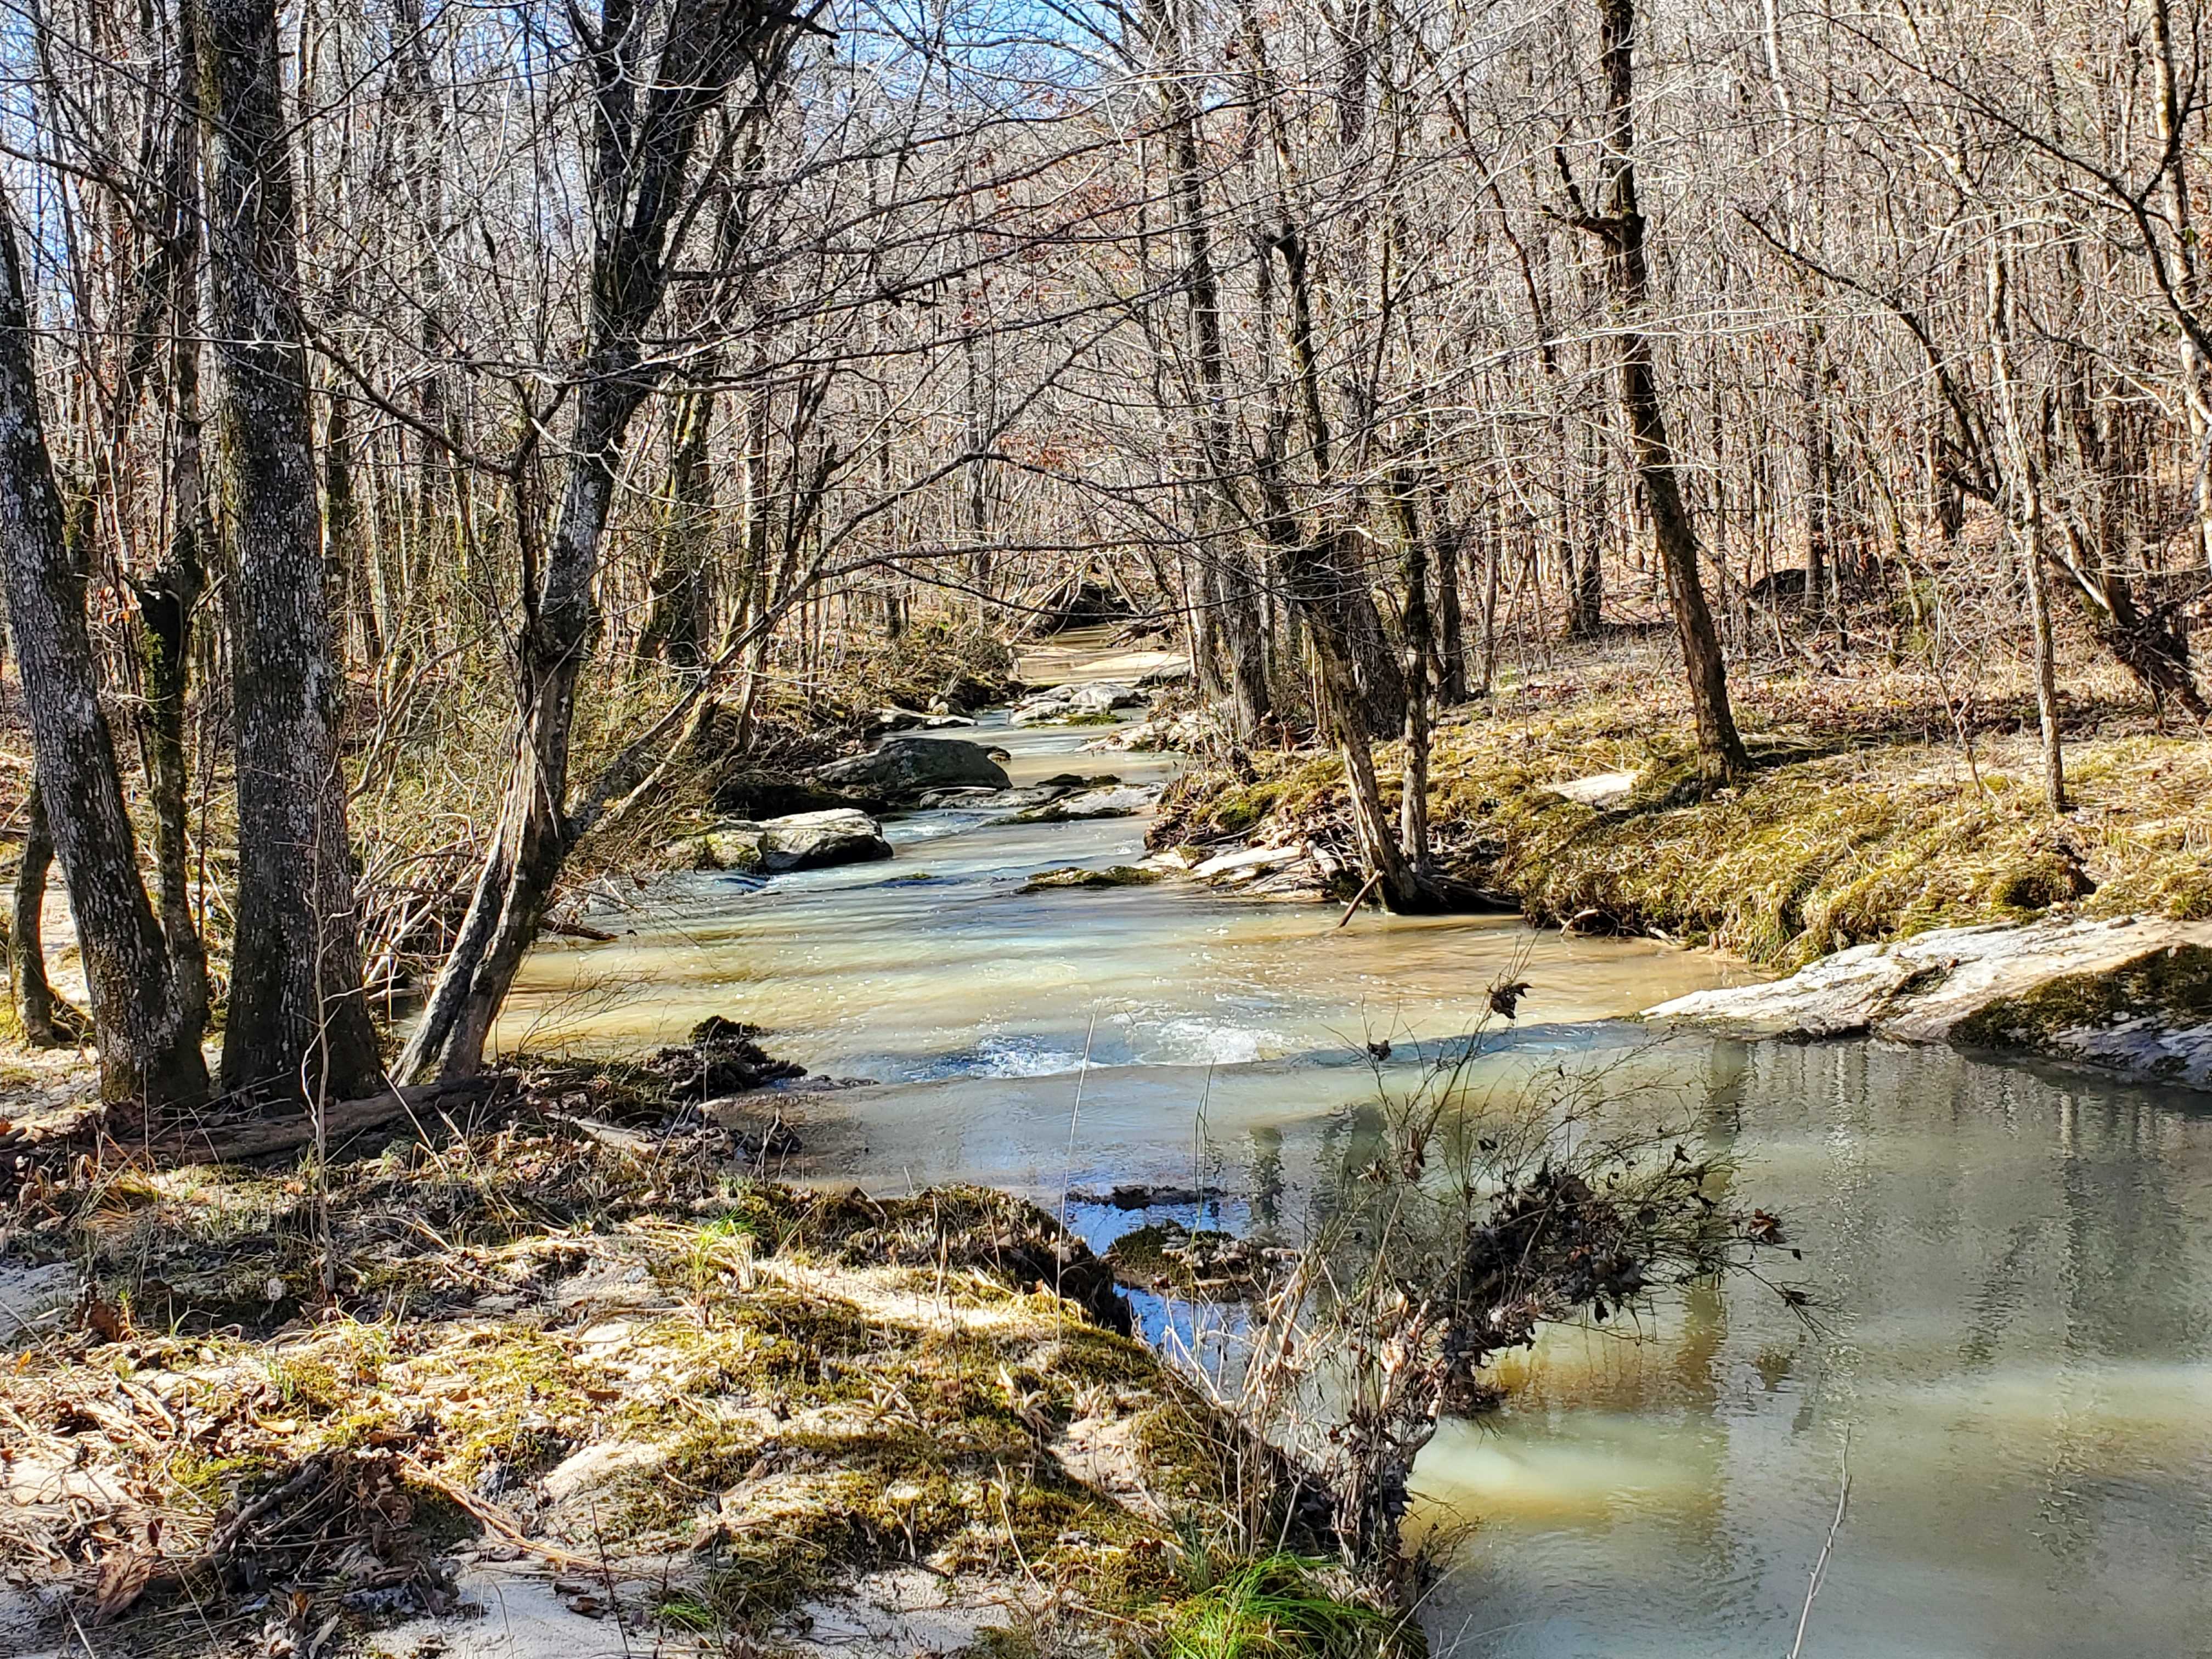 Beautiful rocky Hamilton Branch Creek